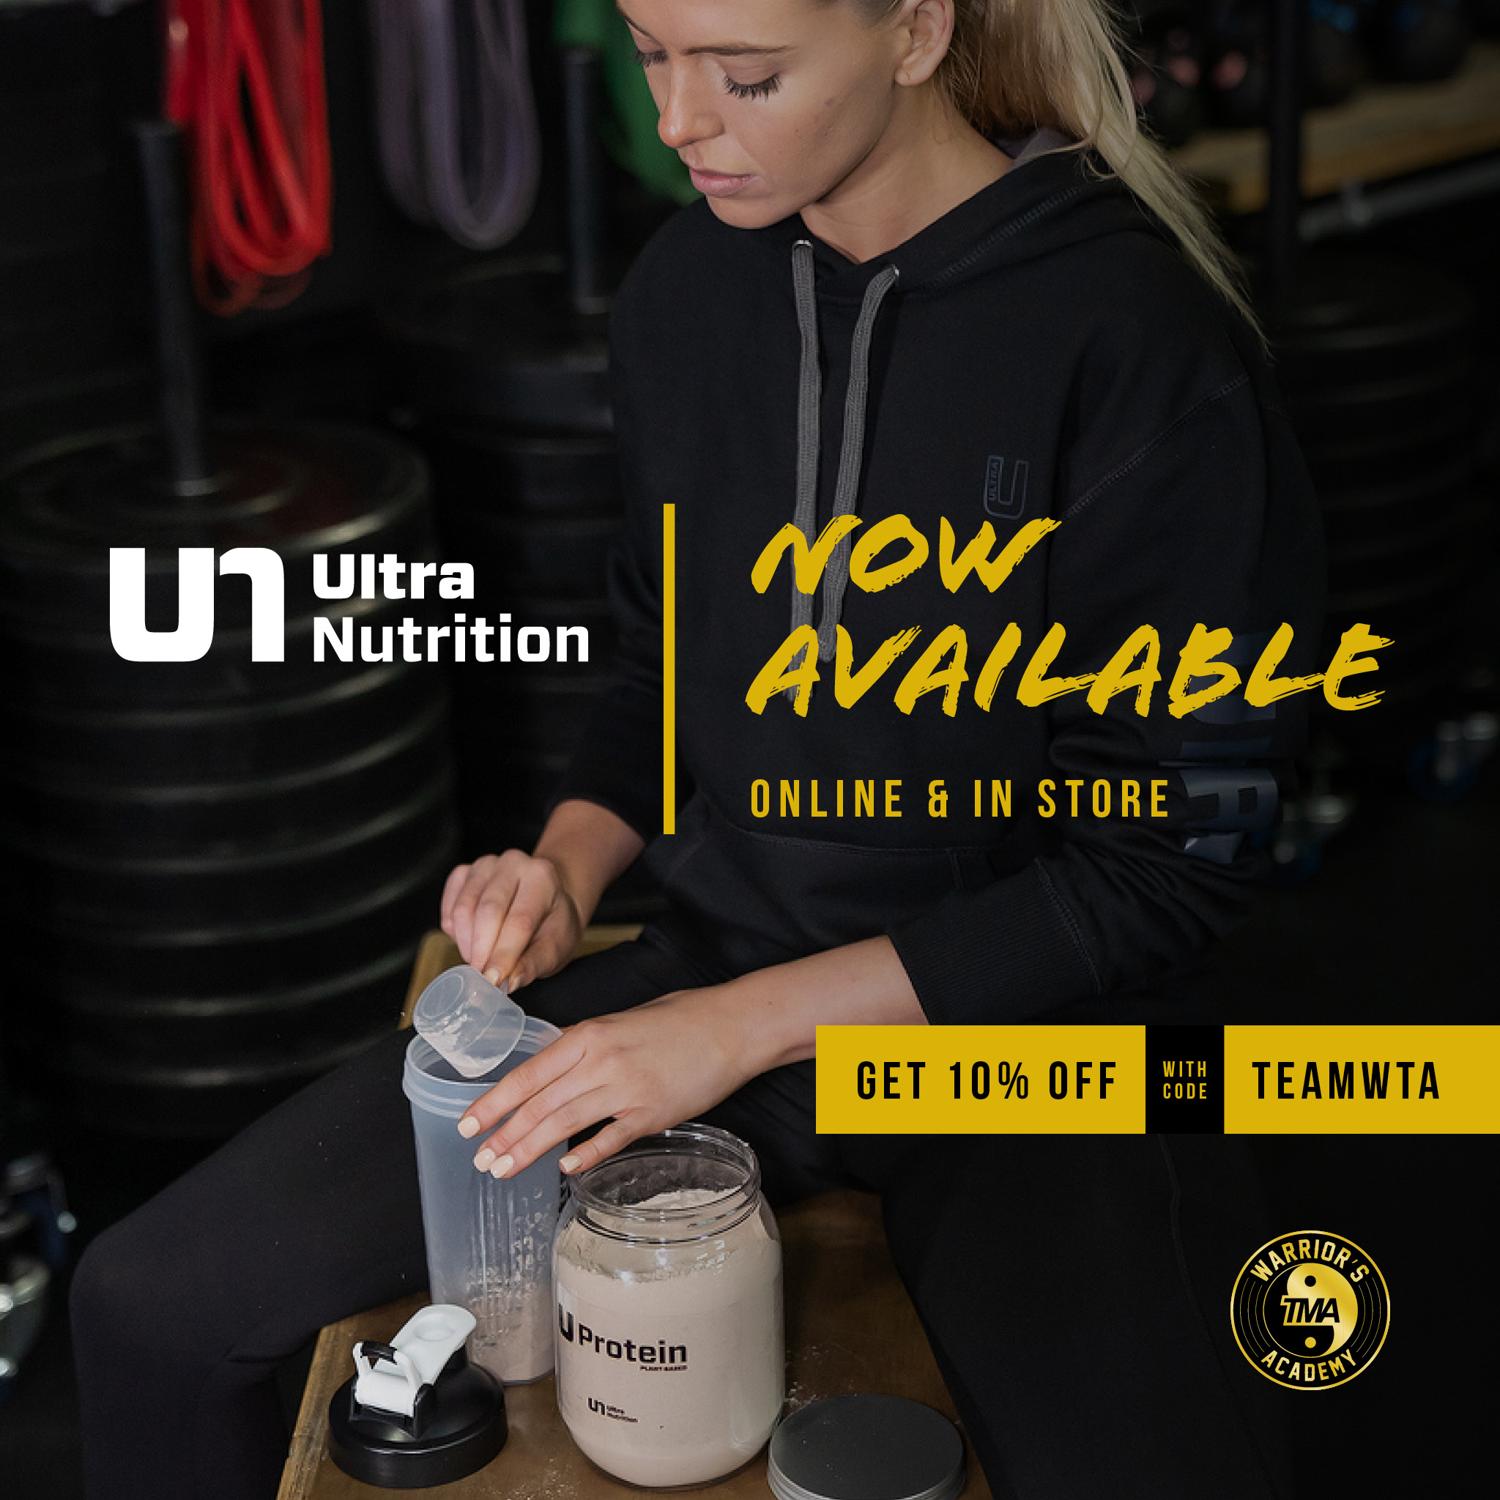 Ultra Nutrition 10% discount using code TEAMWTA